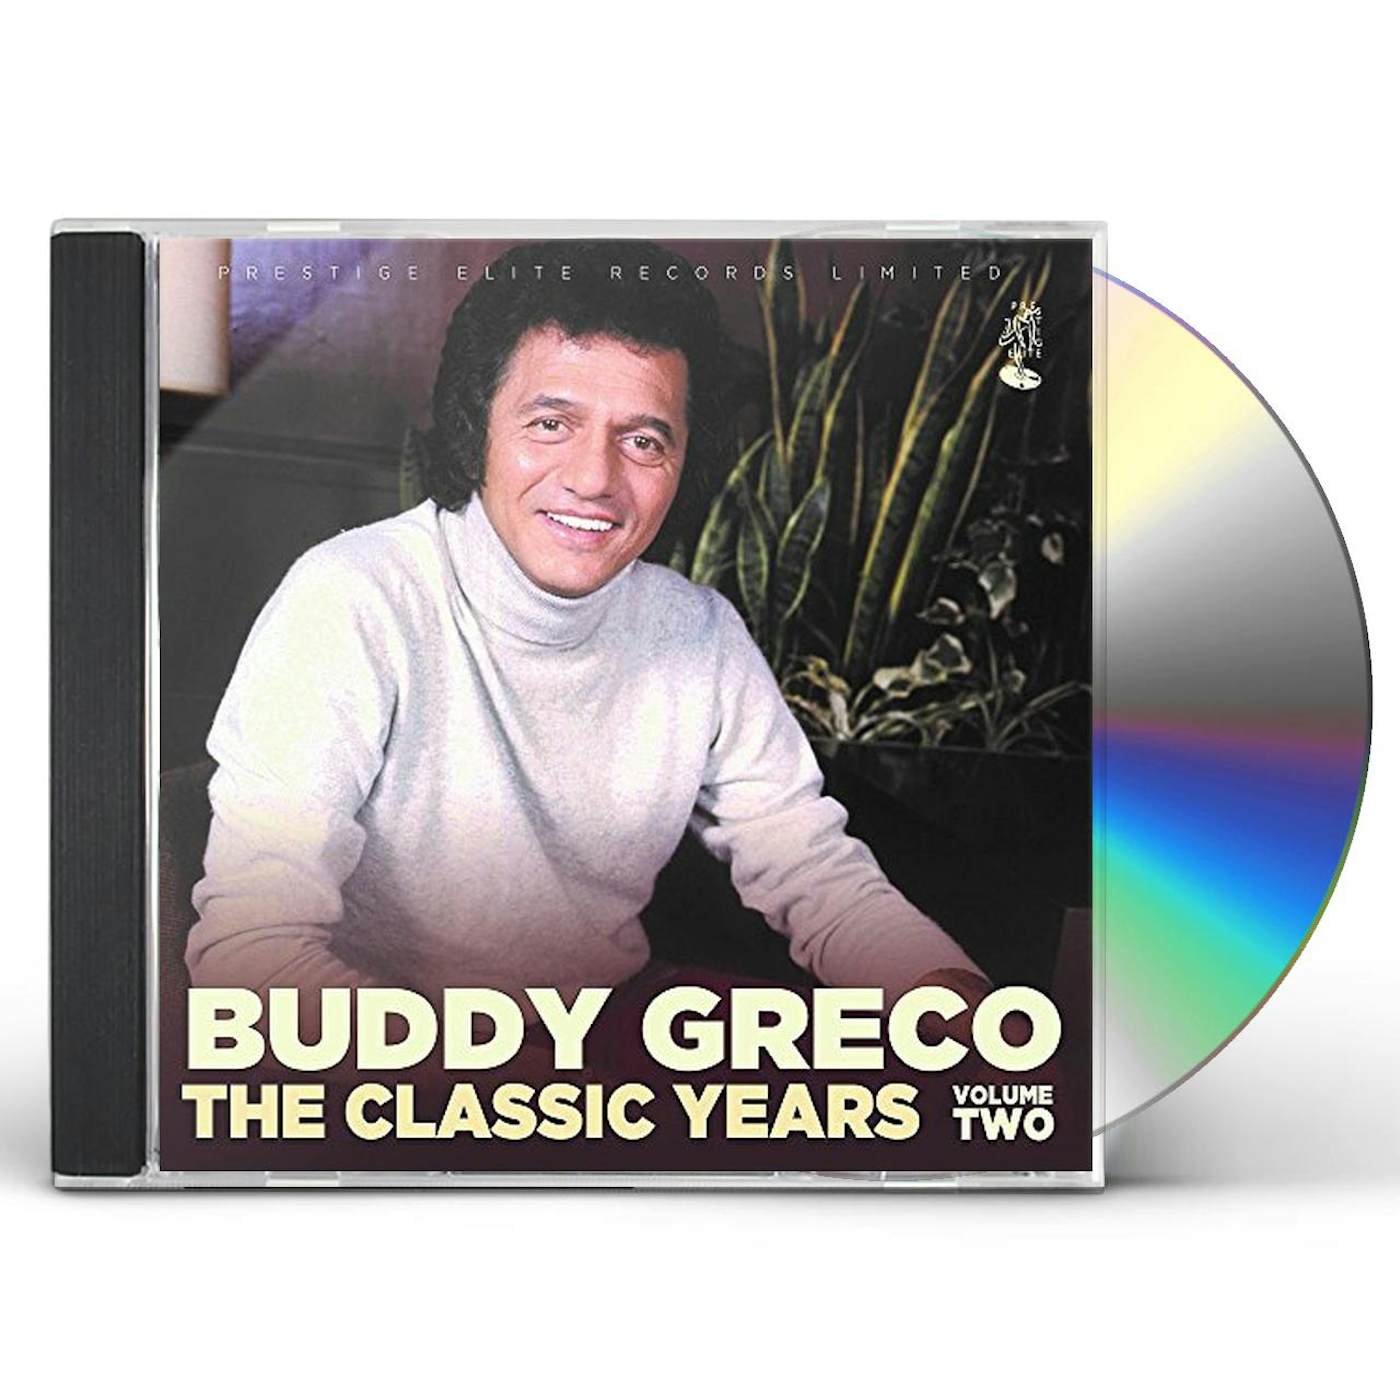 Buddy Greco CLASSIC YEARS VOL 2 CD